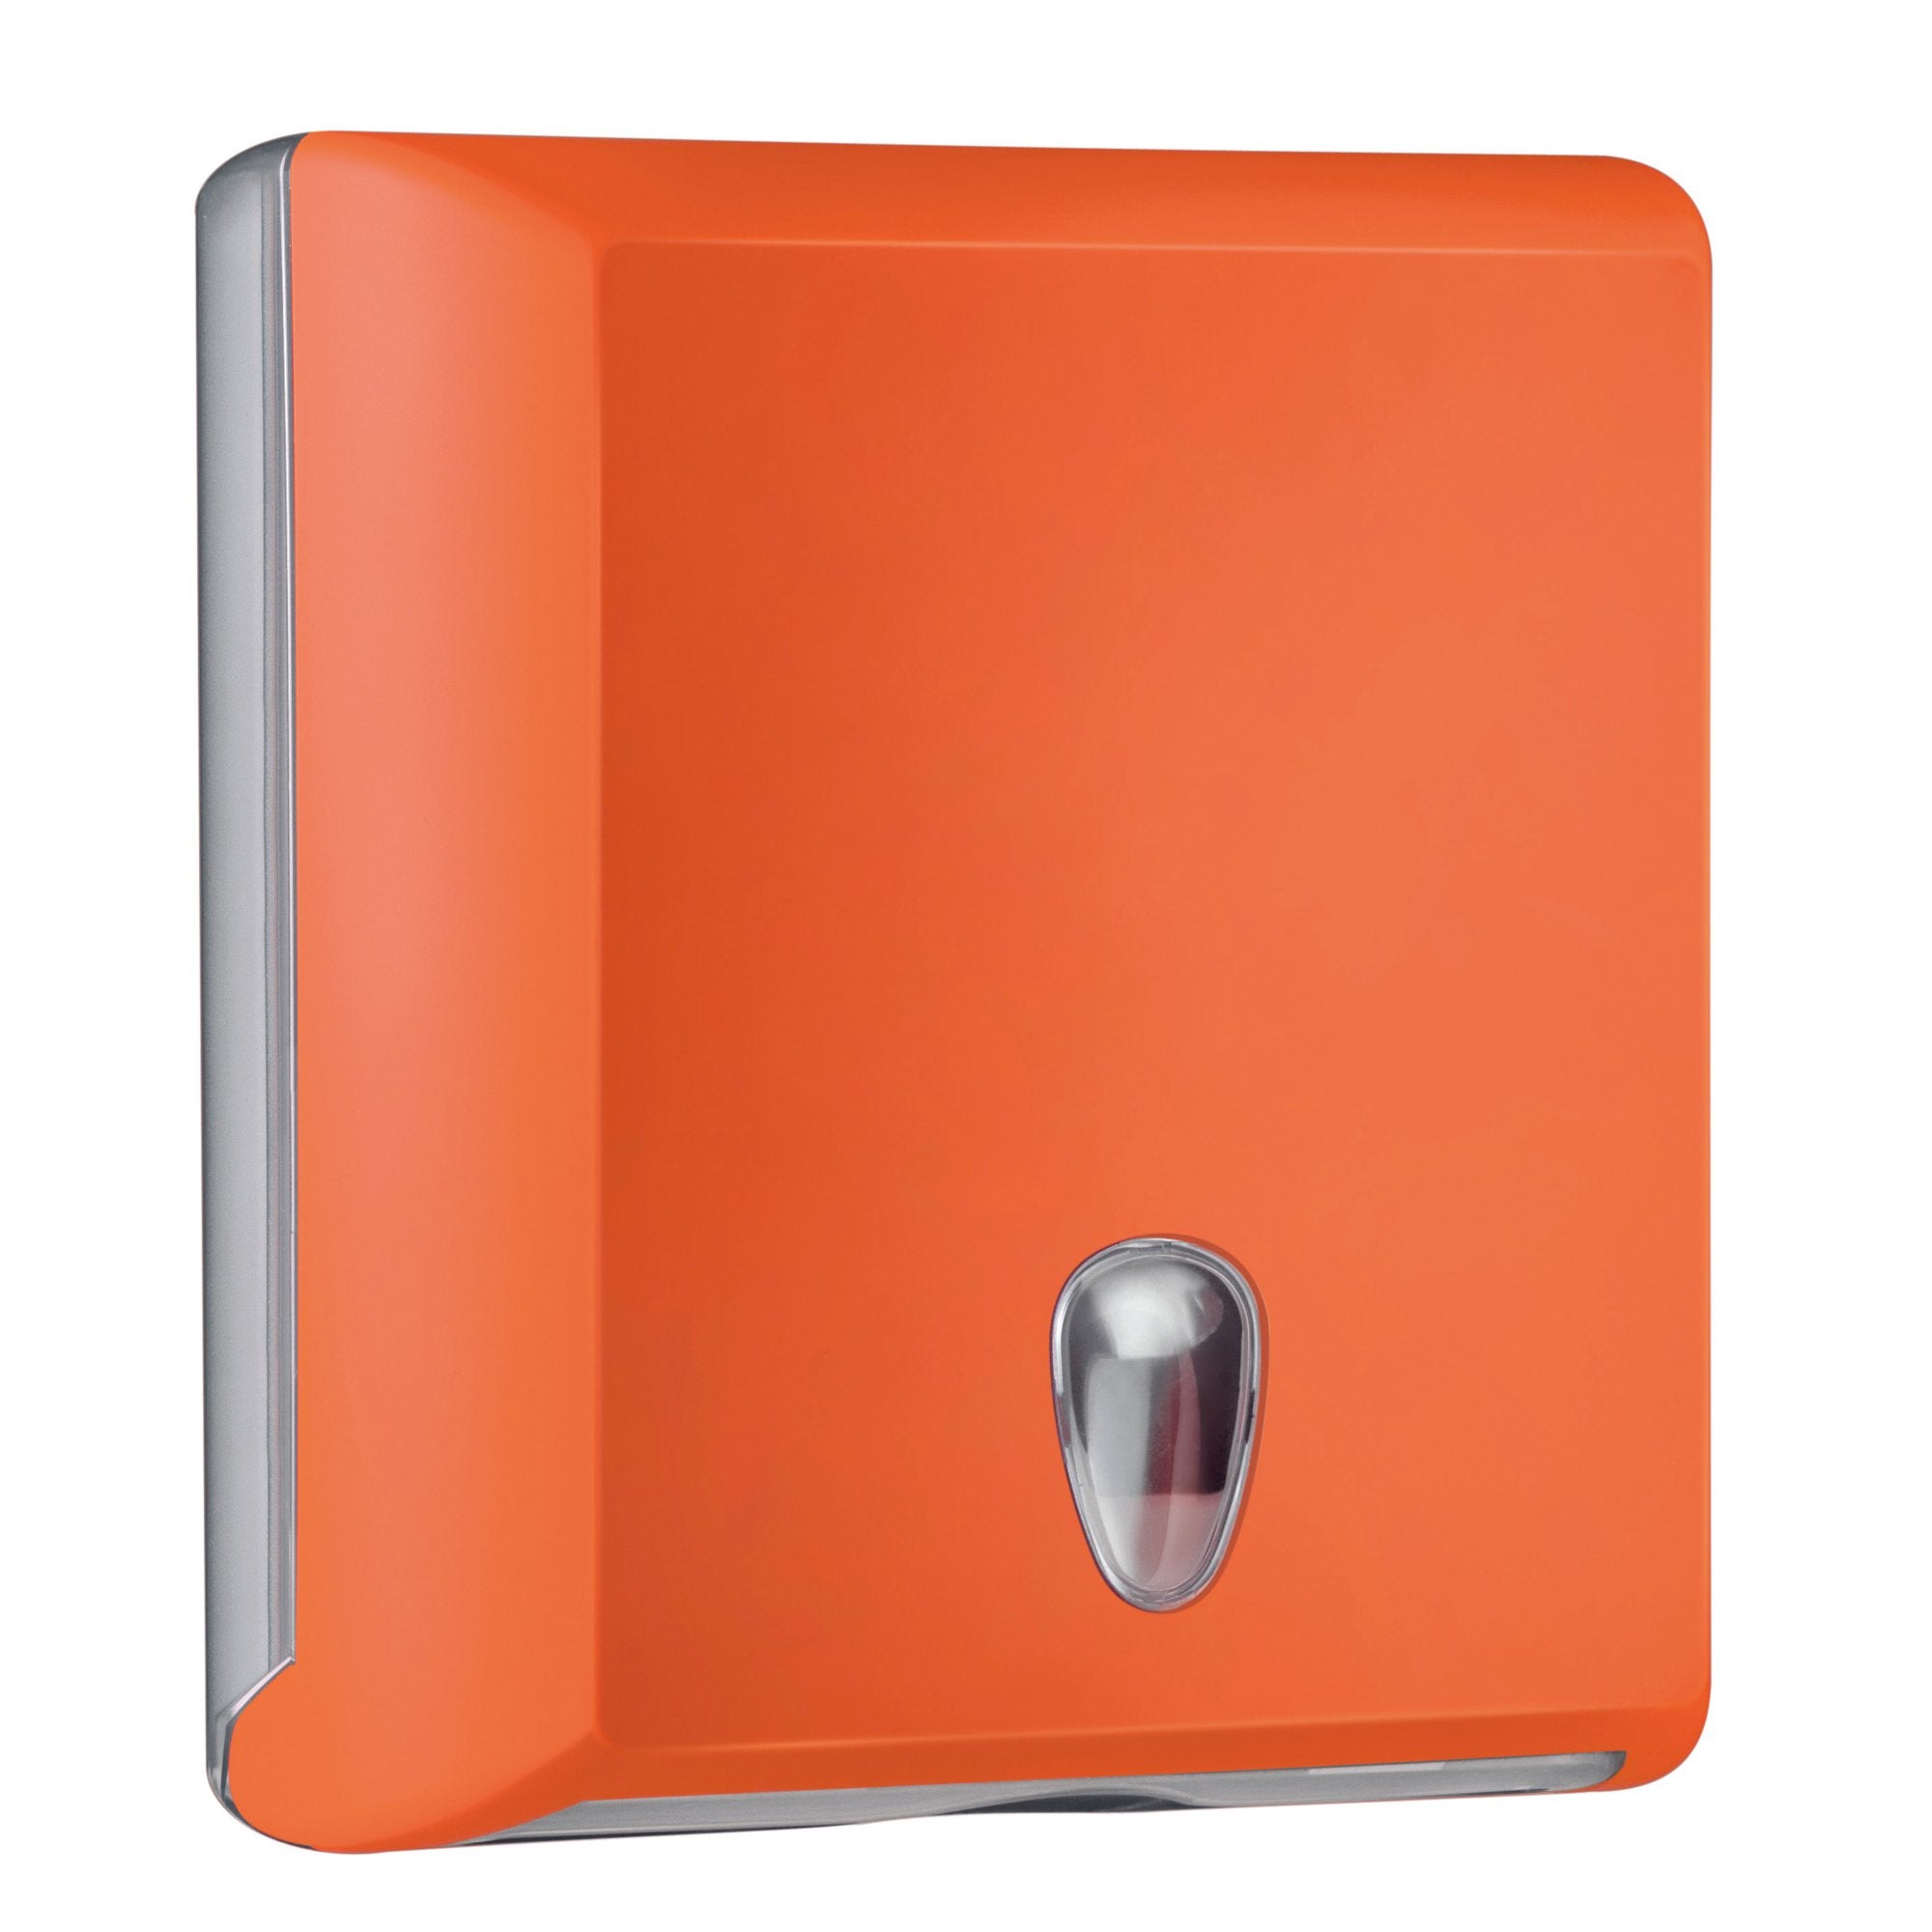 mar-plast-dispenser-asciugamani-piegati-c-z-orange-soft-touch